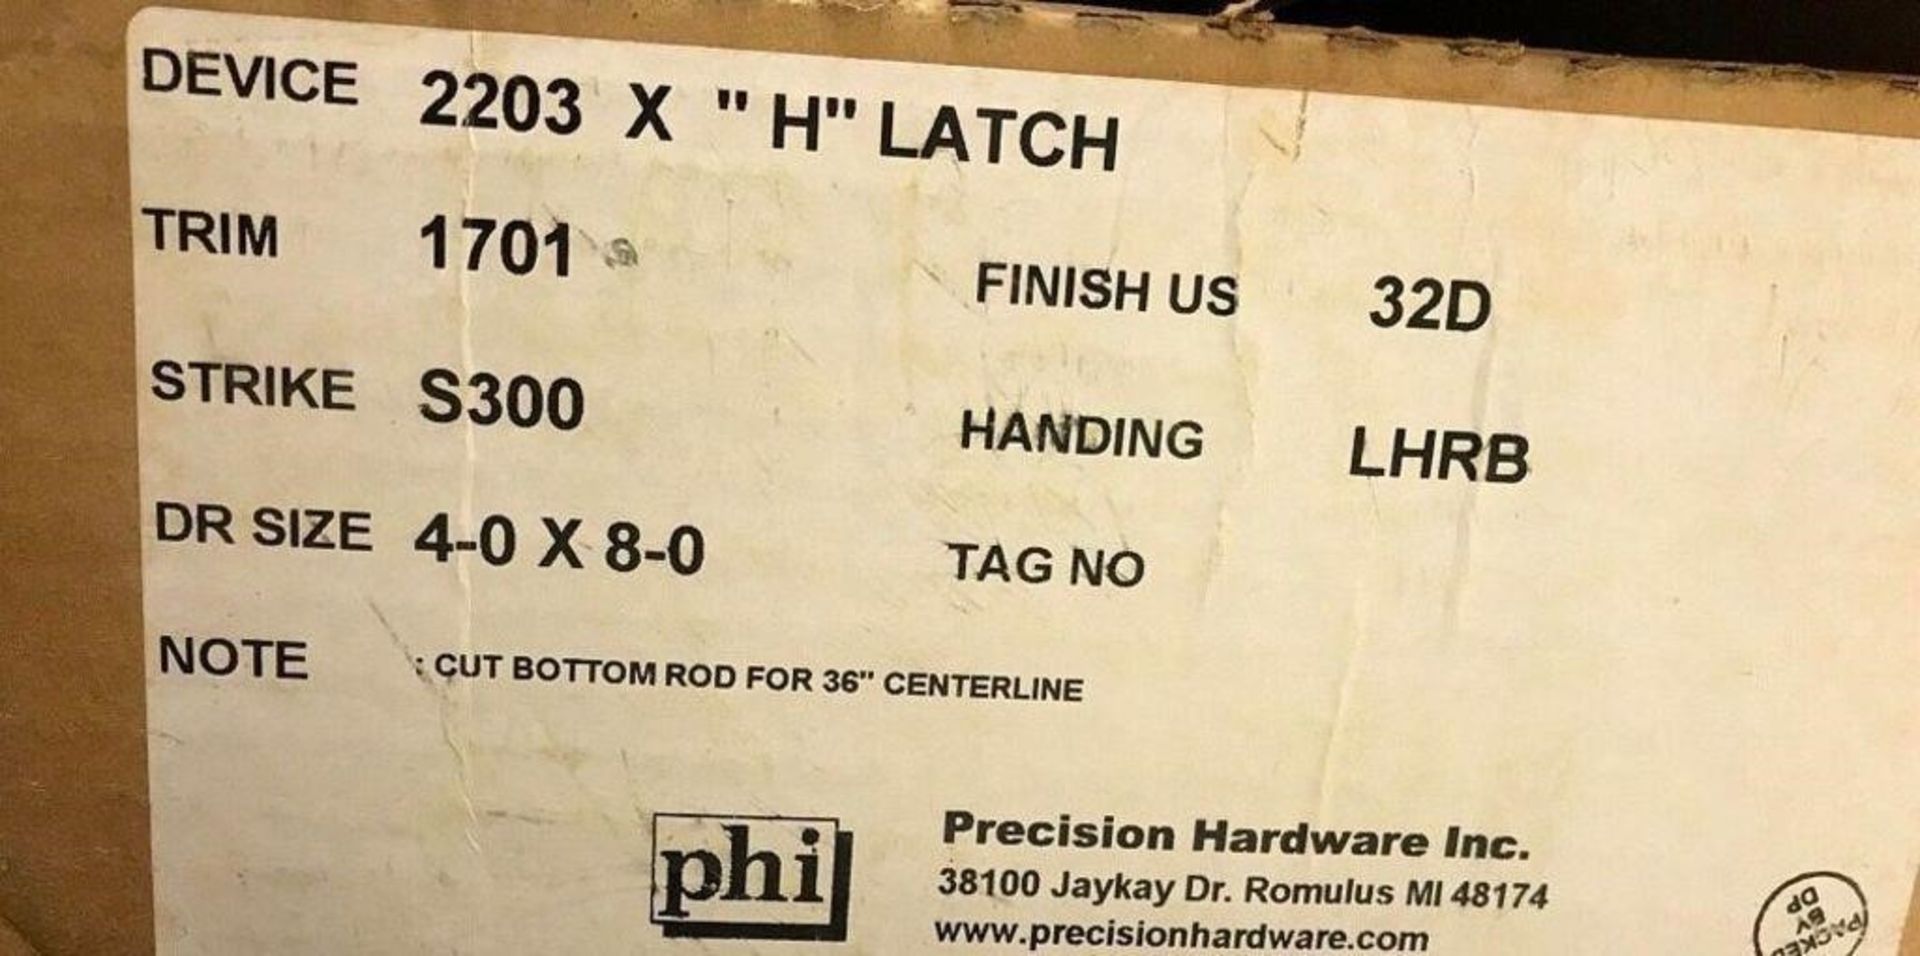 Precision Hardware Door Push Exit, Device 2203 x "H" Latch - Image 4 of 4